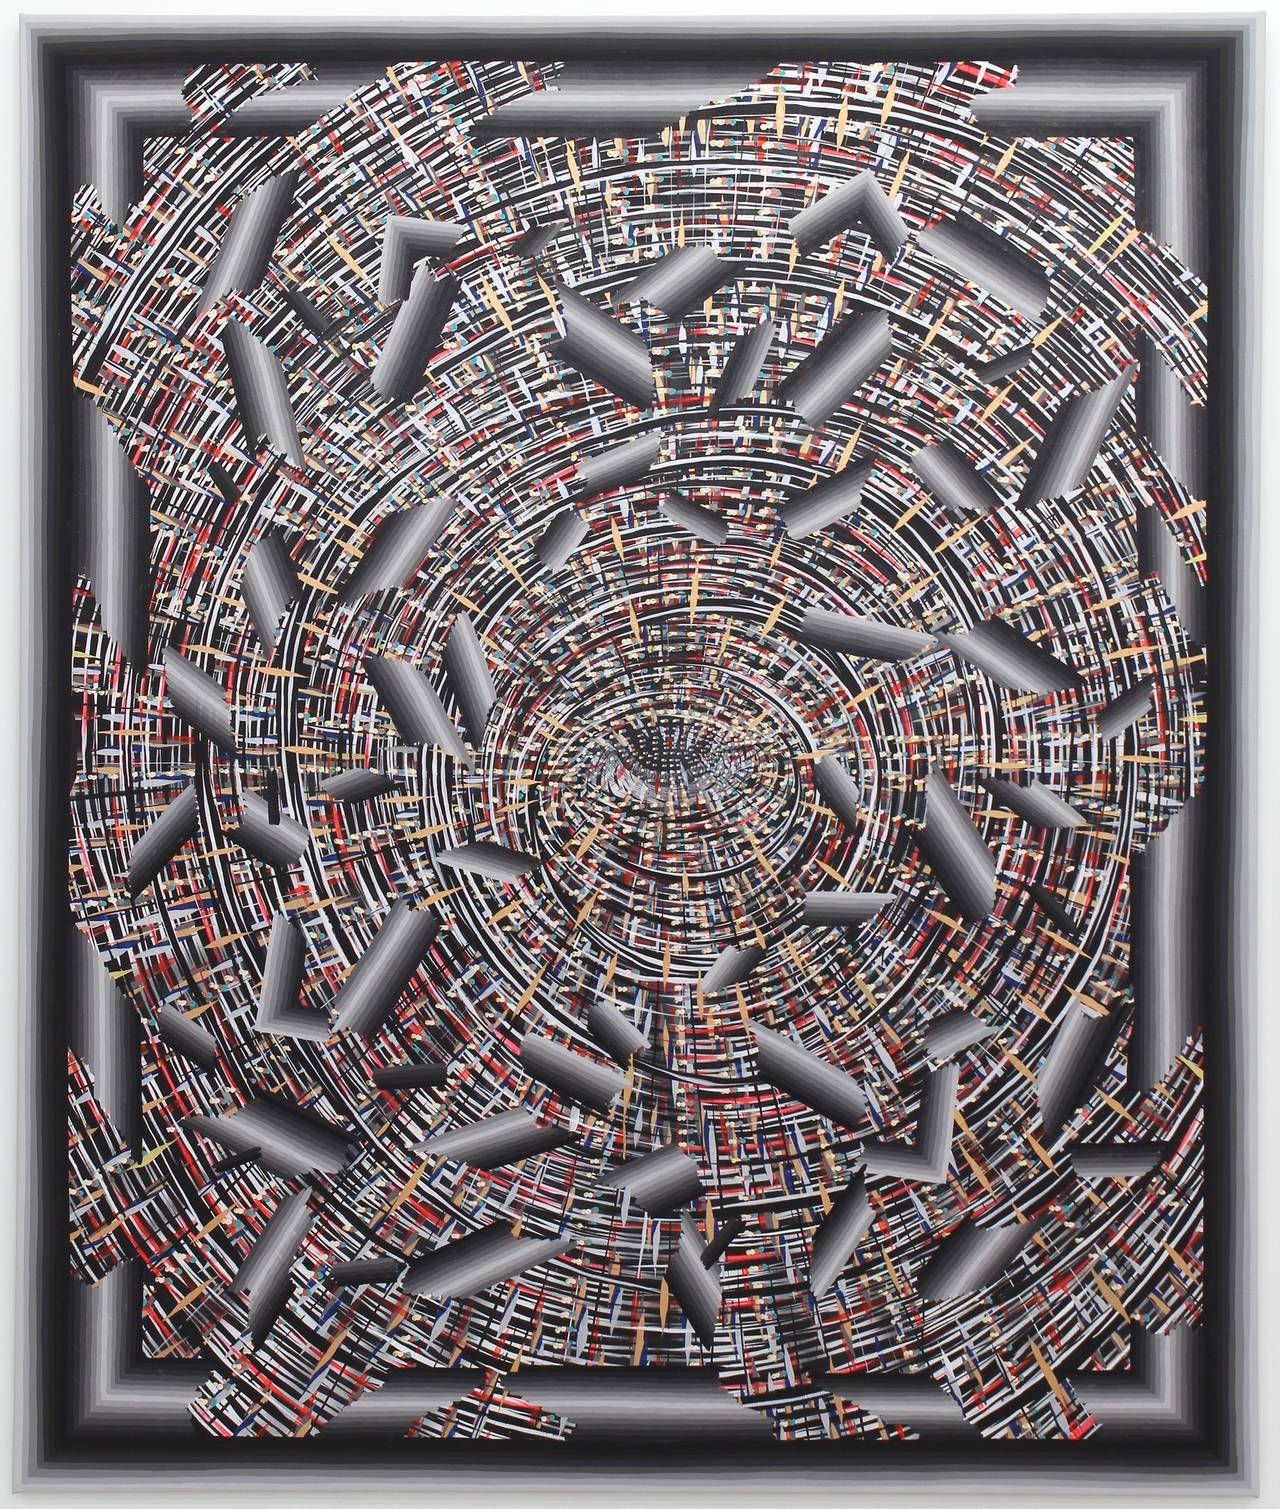 Exploding Eye (Broken Pattern) - Painting by Andrew Schoultz